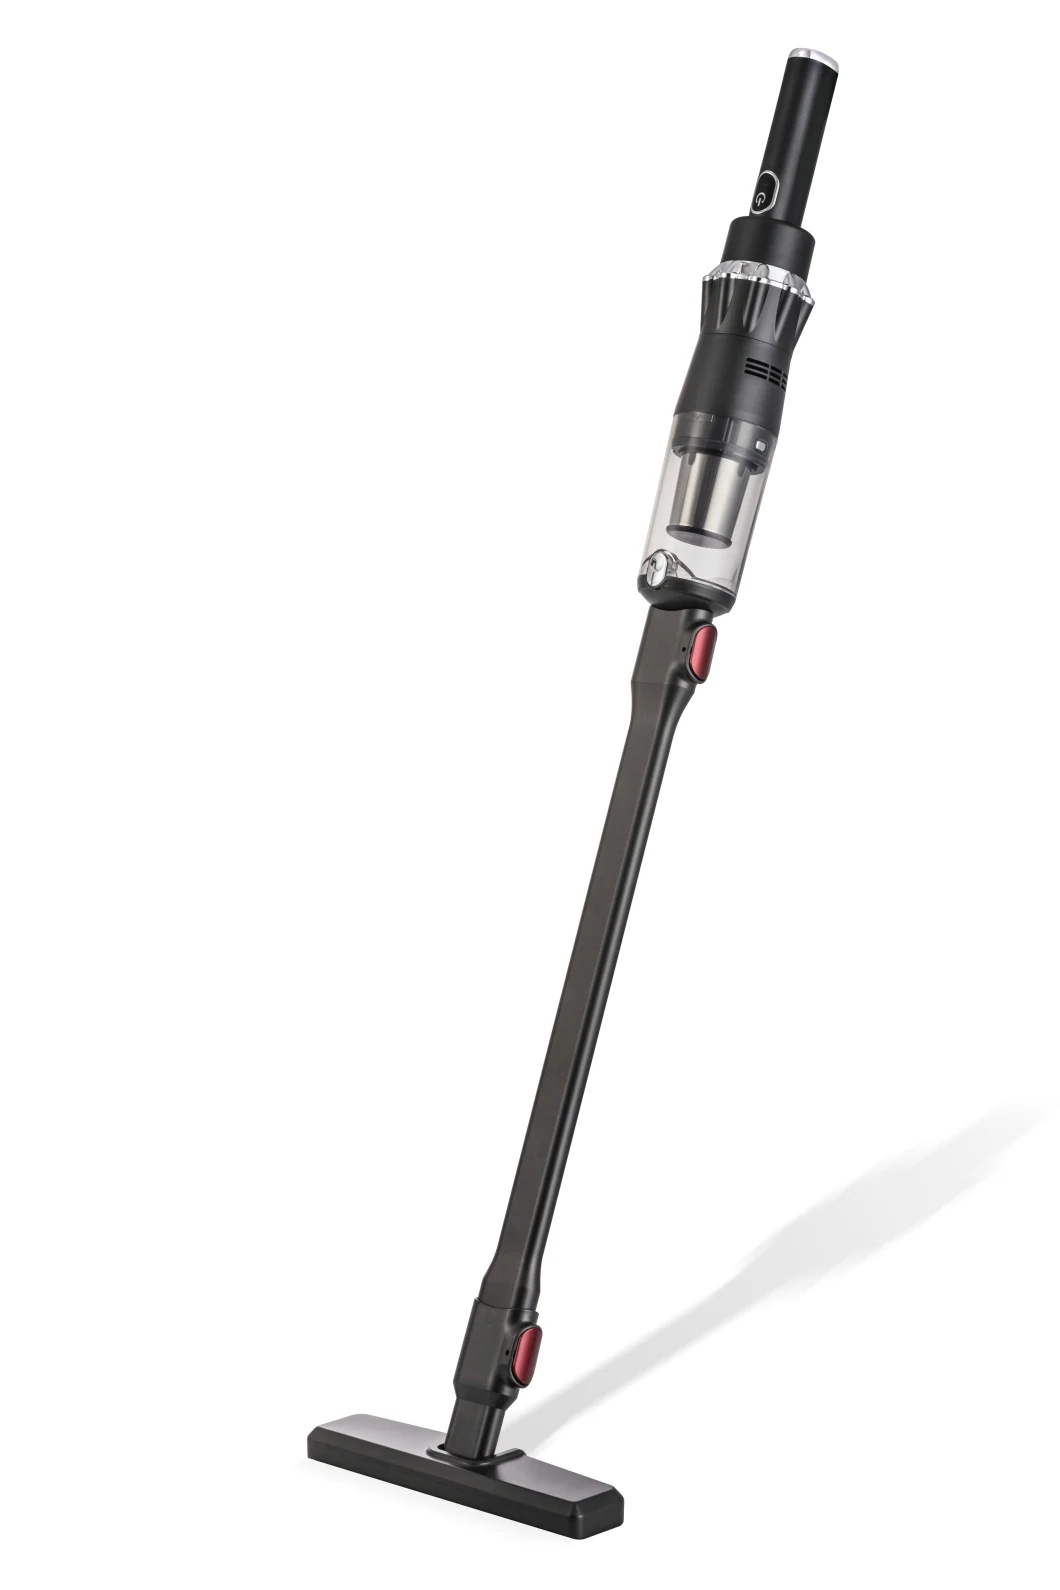 11.1/14.8V Handy Bagless Cordless HEPA Car Home Vacuum Cleaner